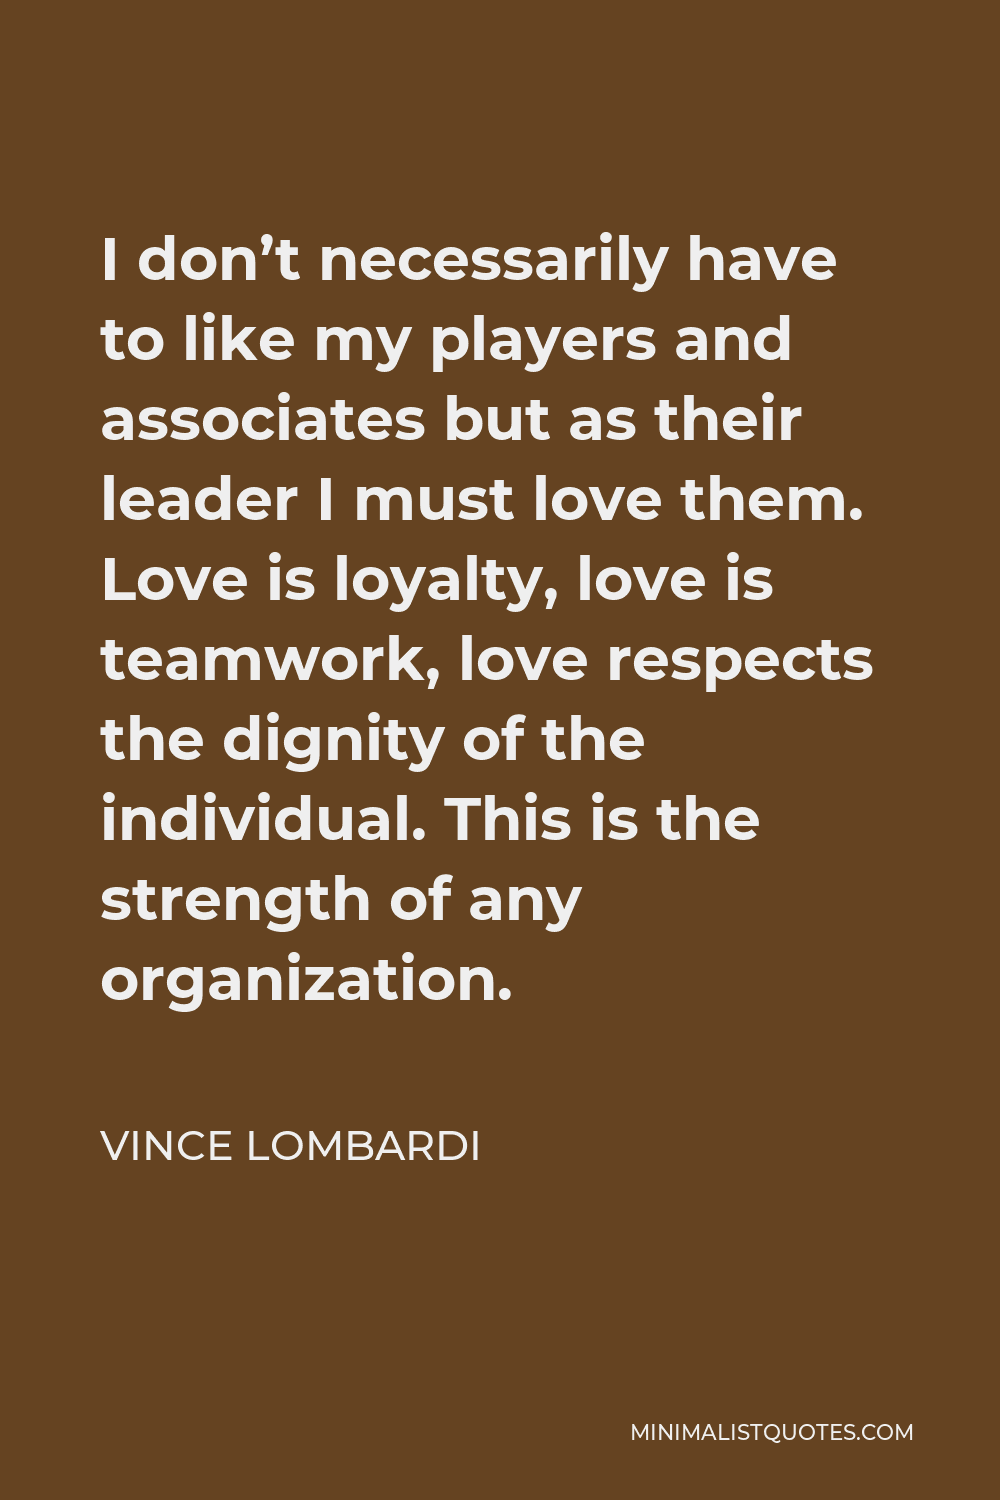 Vince Lombardi Quotes | Minimalist Quotes